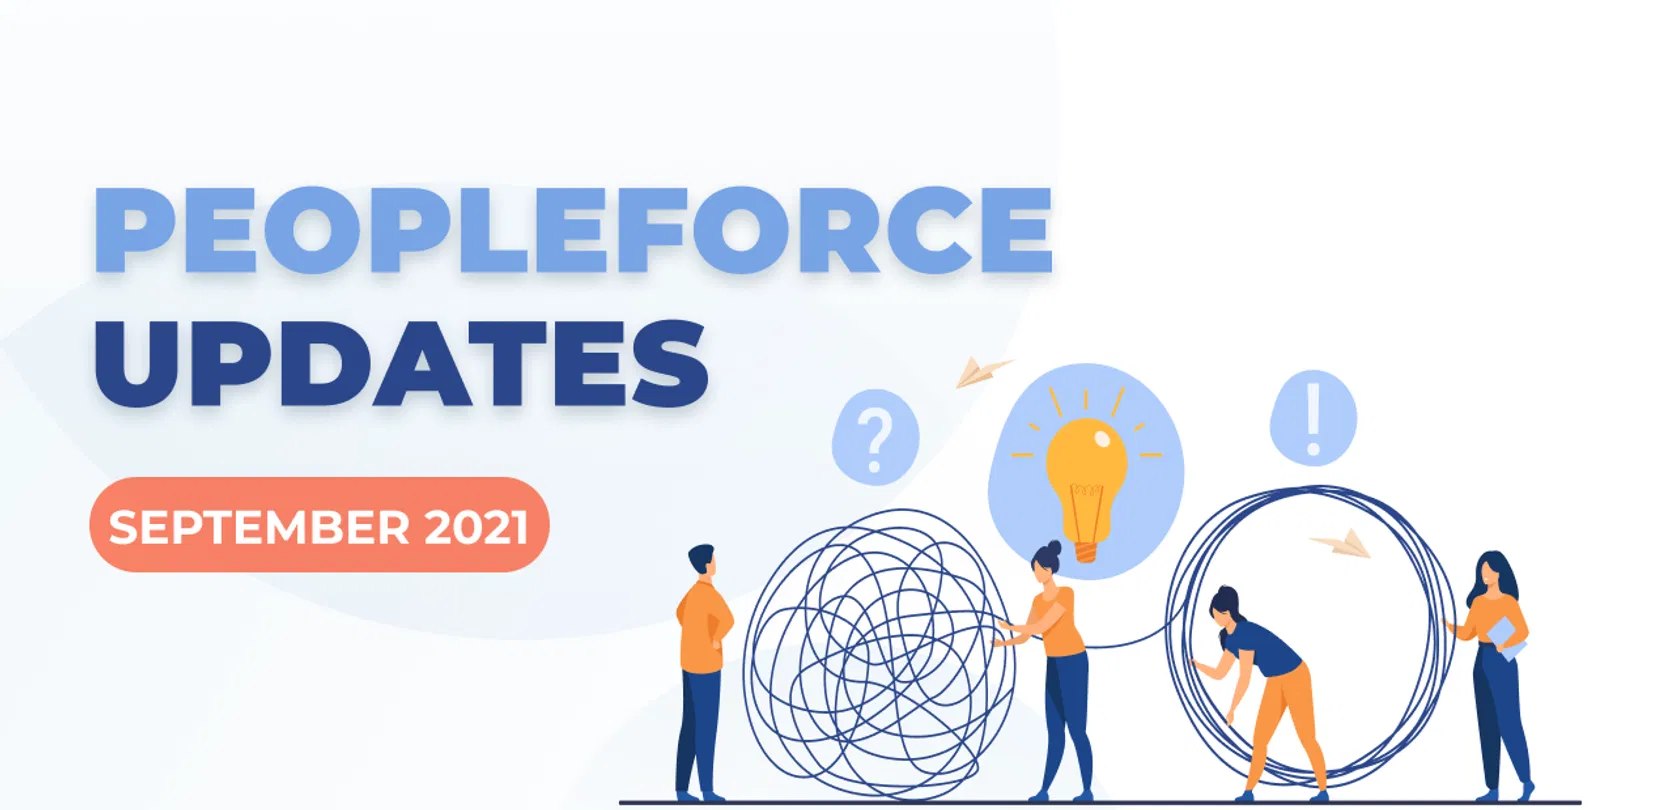 PeopleForce updates september 2021